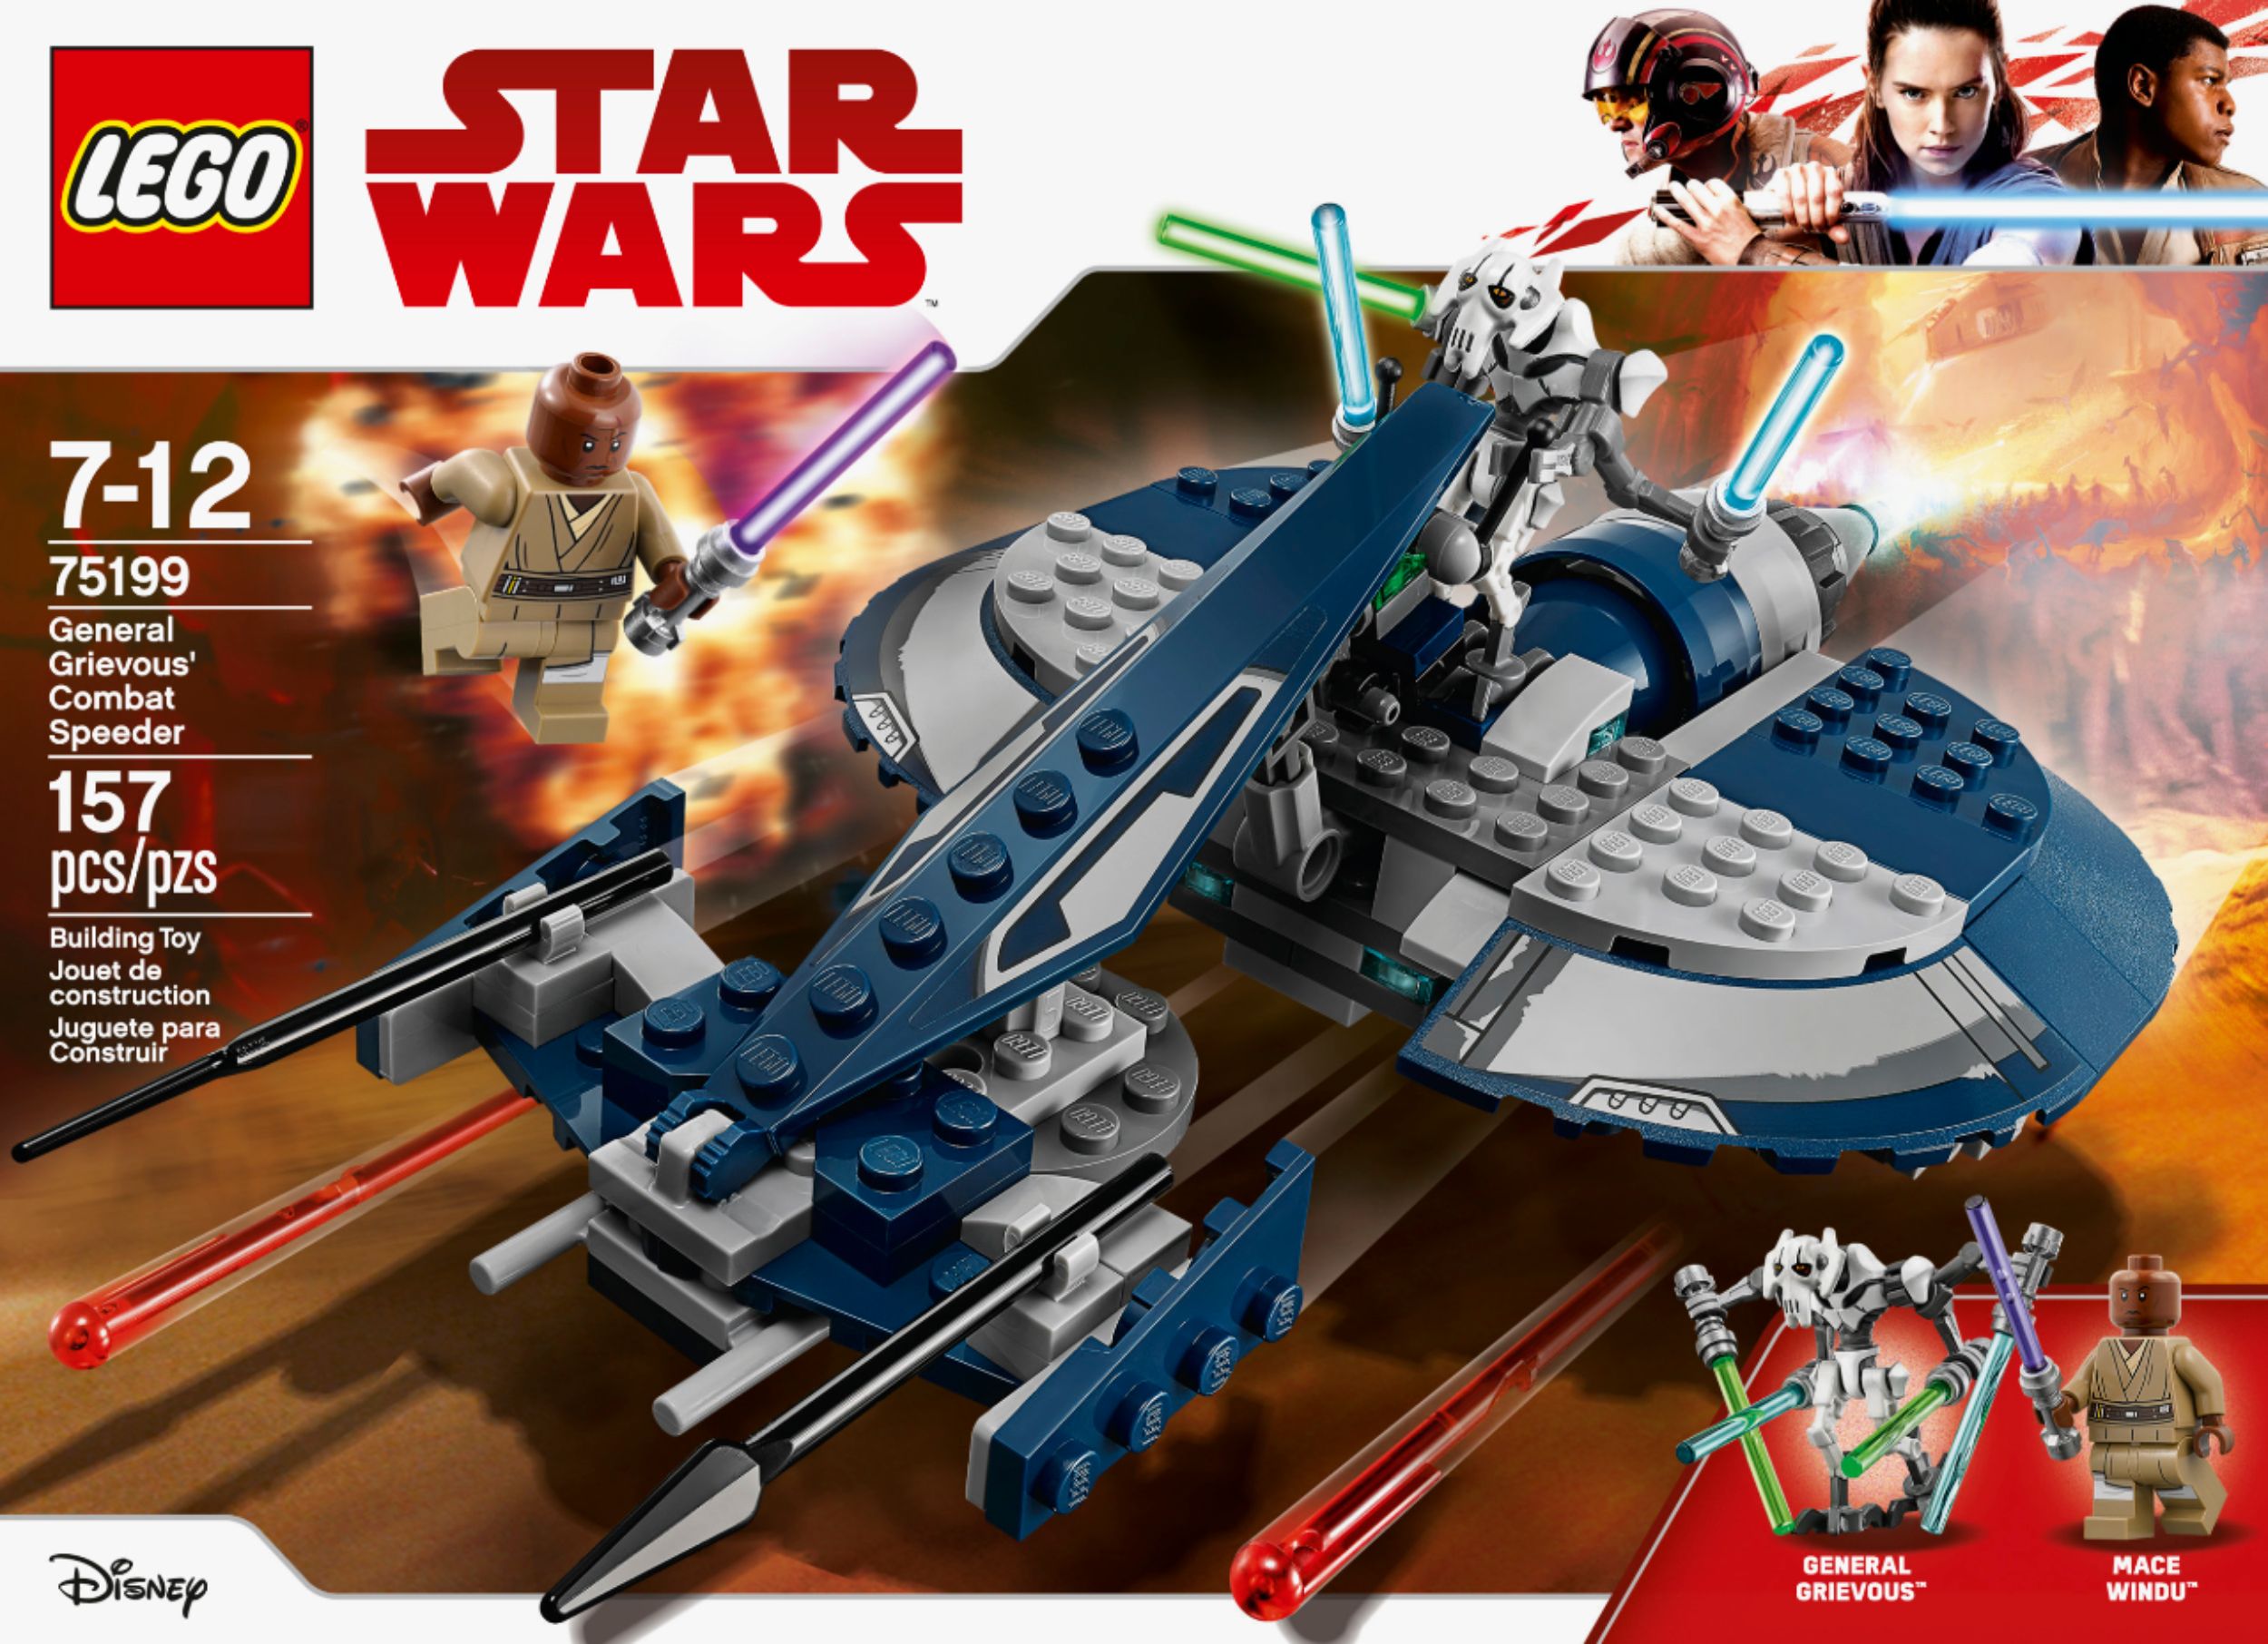 LEGO - Star Wars General Grievous' Combat Speeder Building Set 75199 - Blue